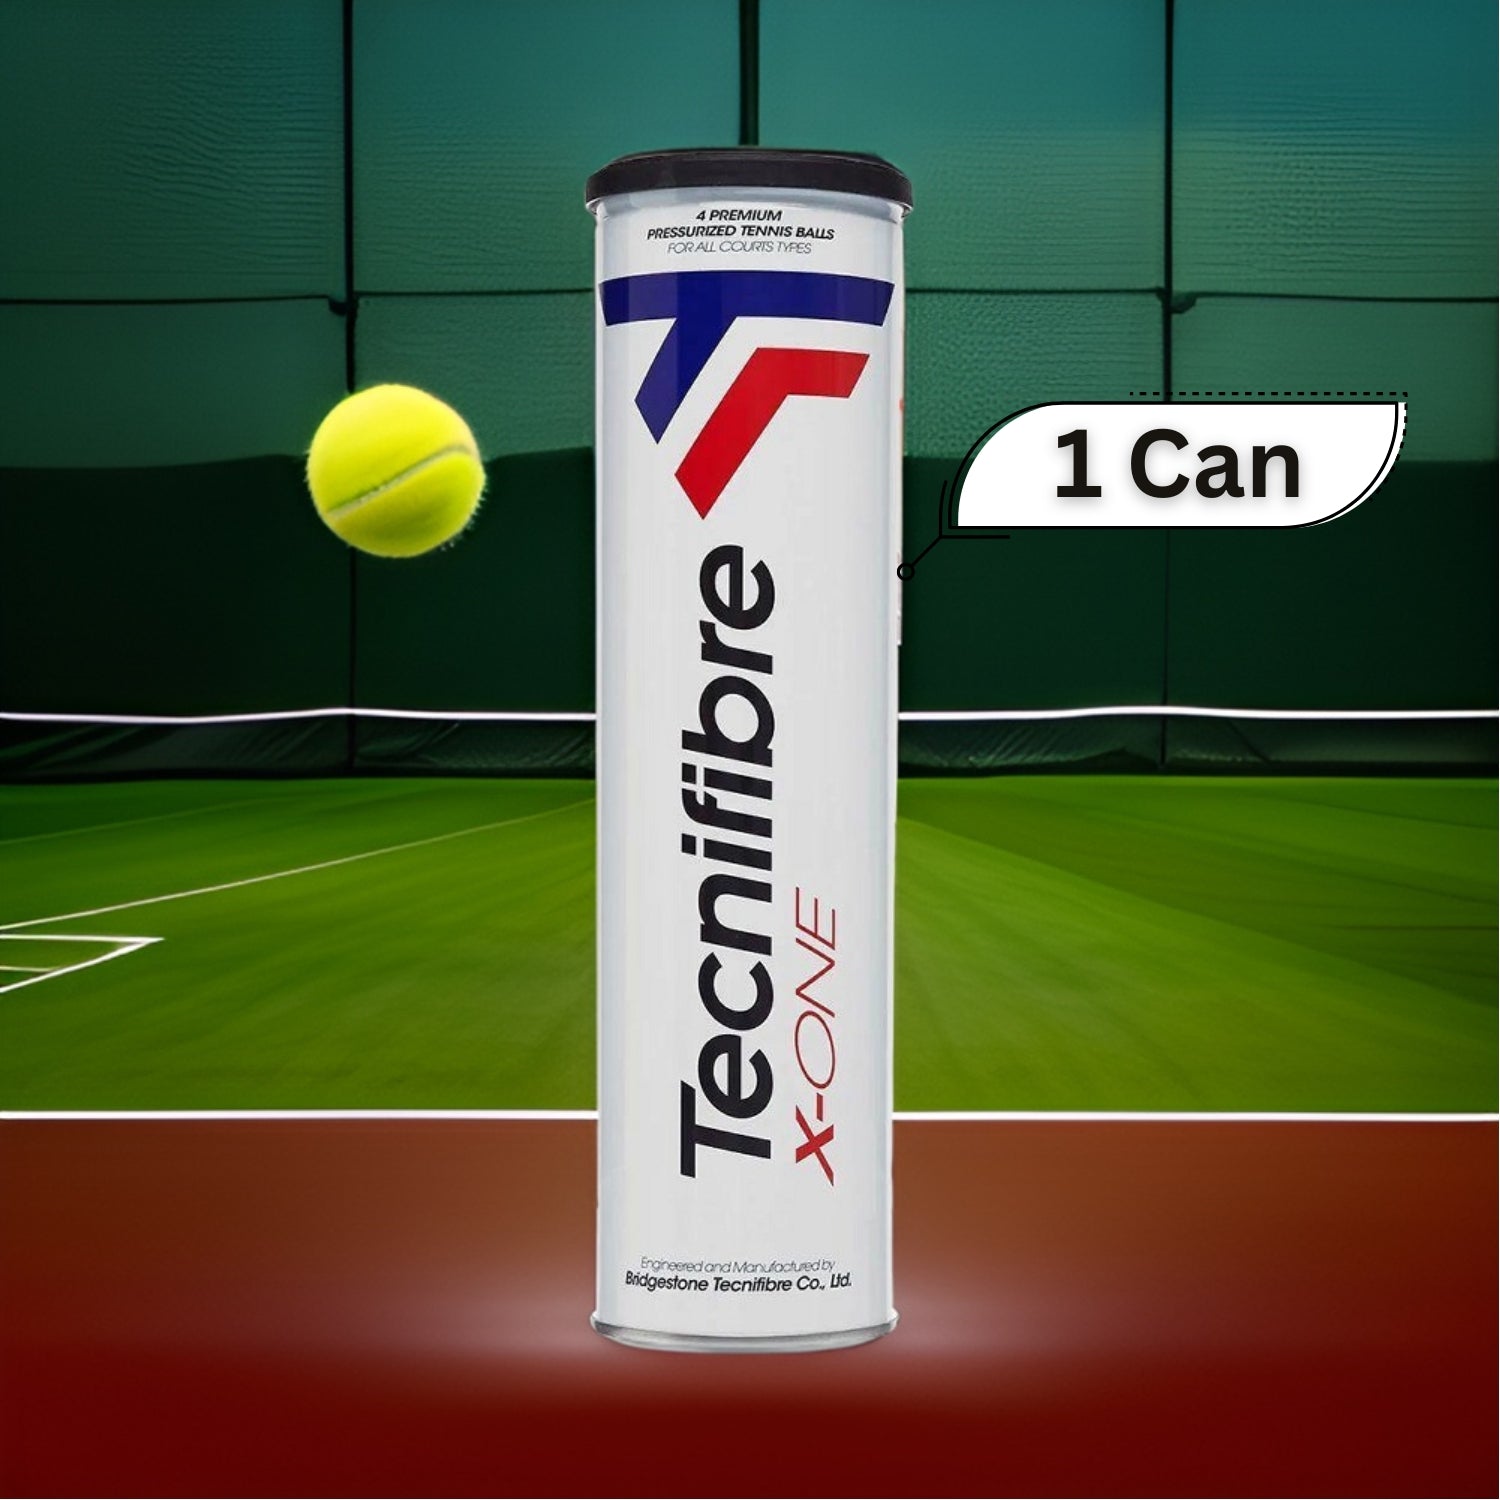 Tecnifibre X-One Tennis Balls Can (1 Can) - Best Price online Prokicksports.com